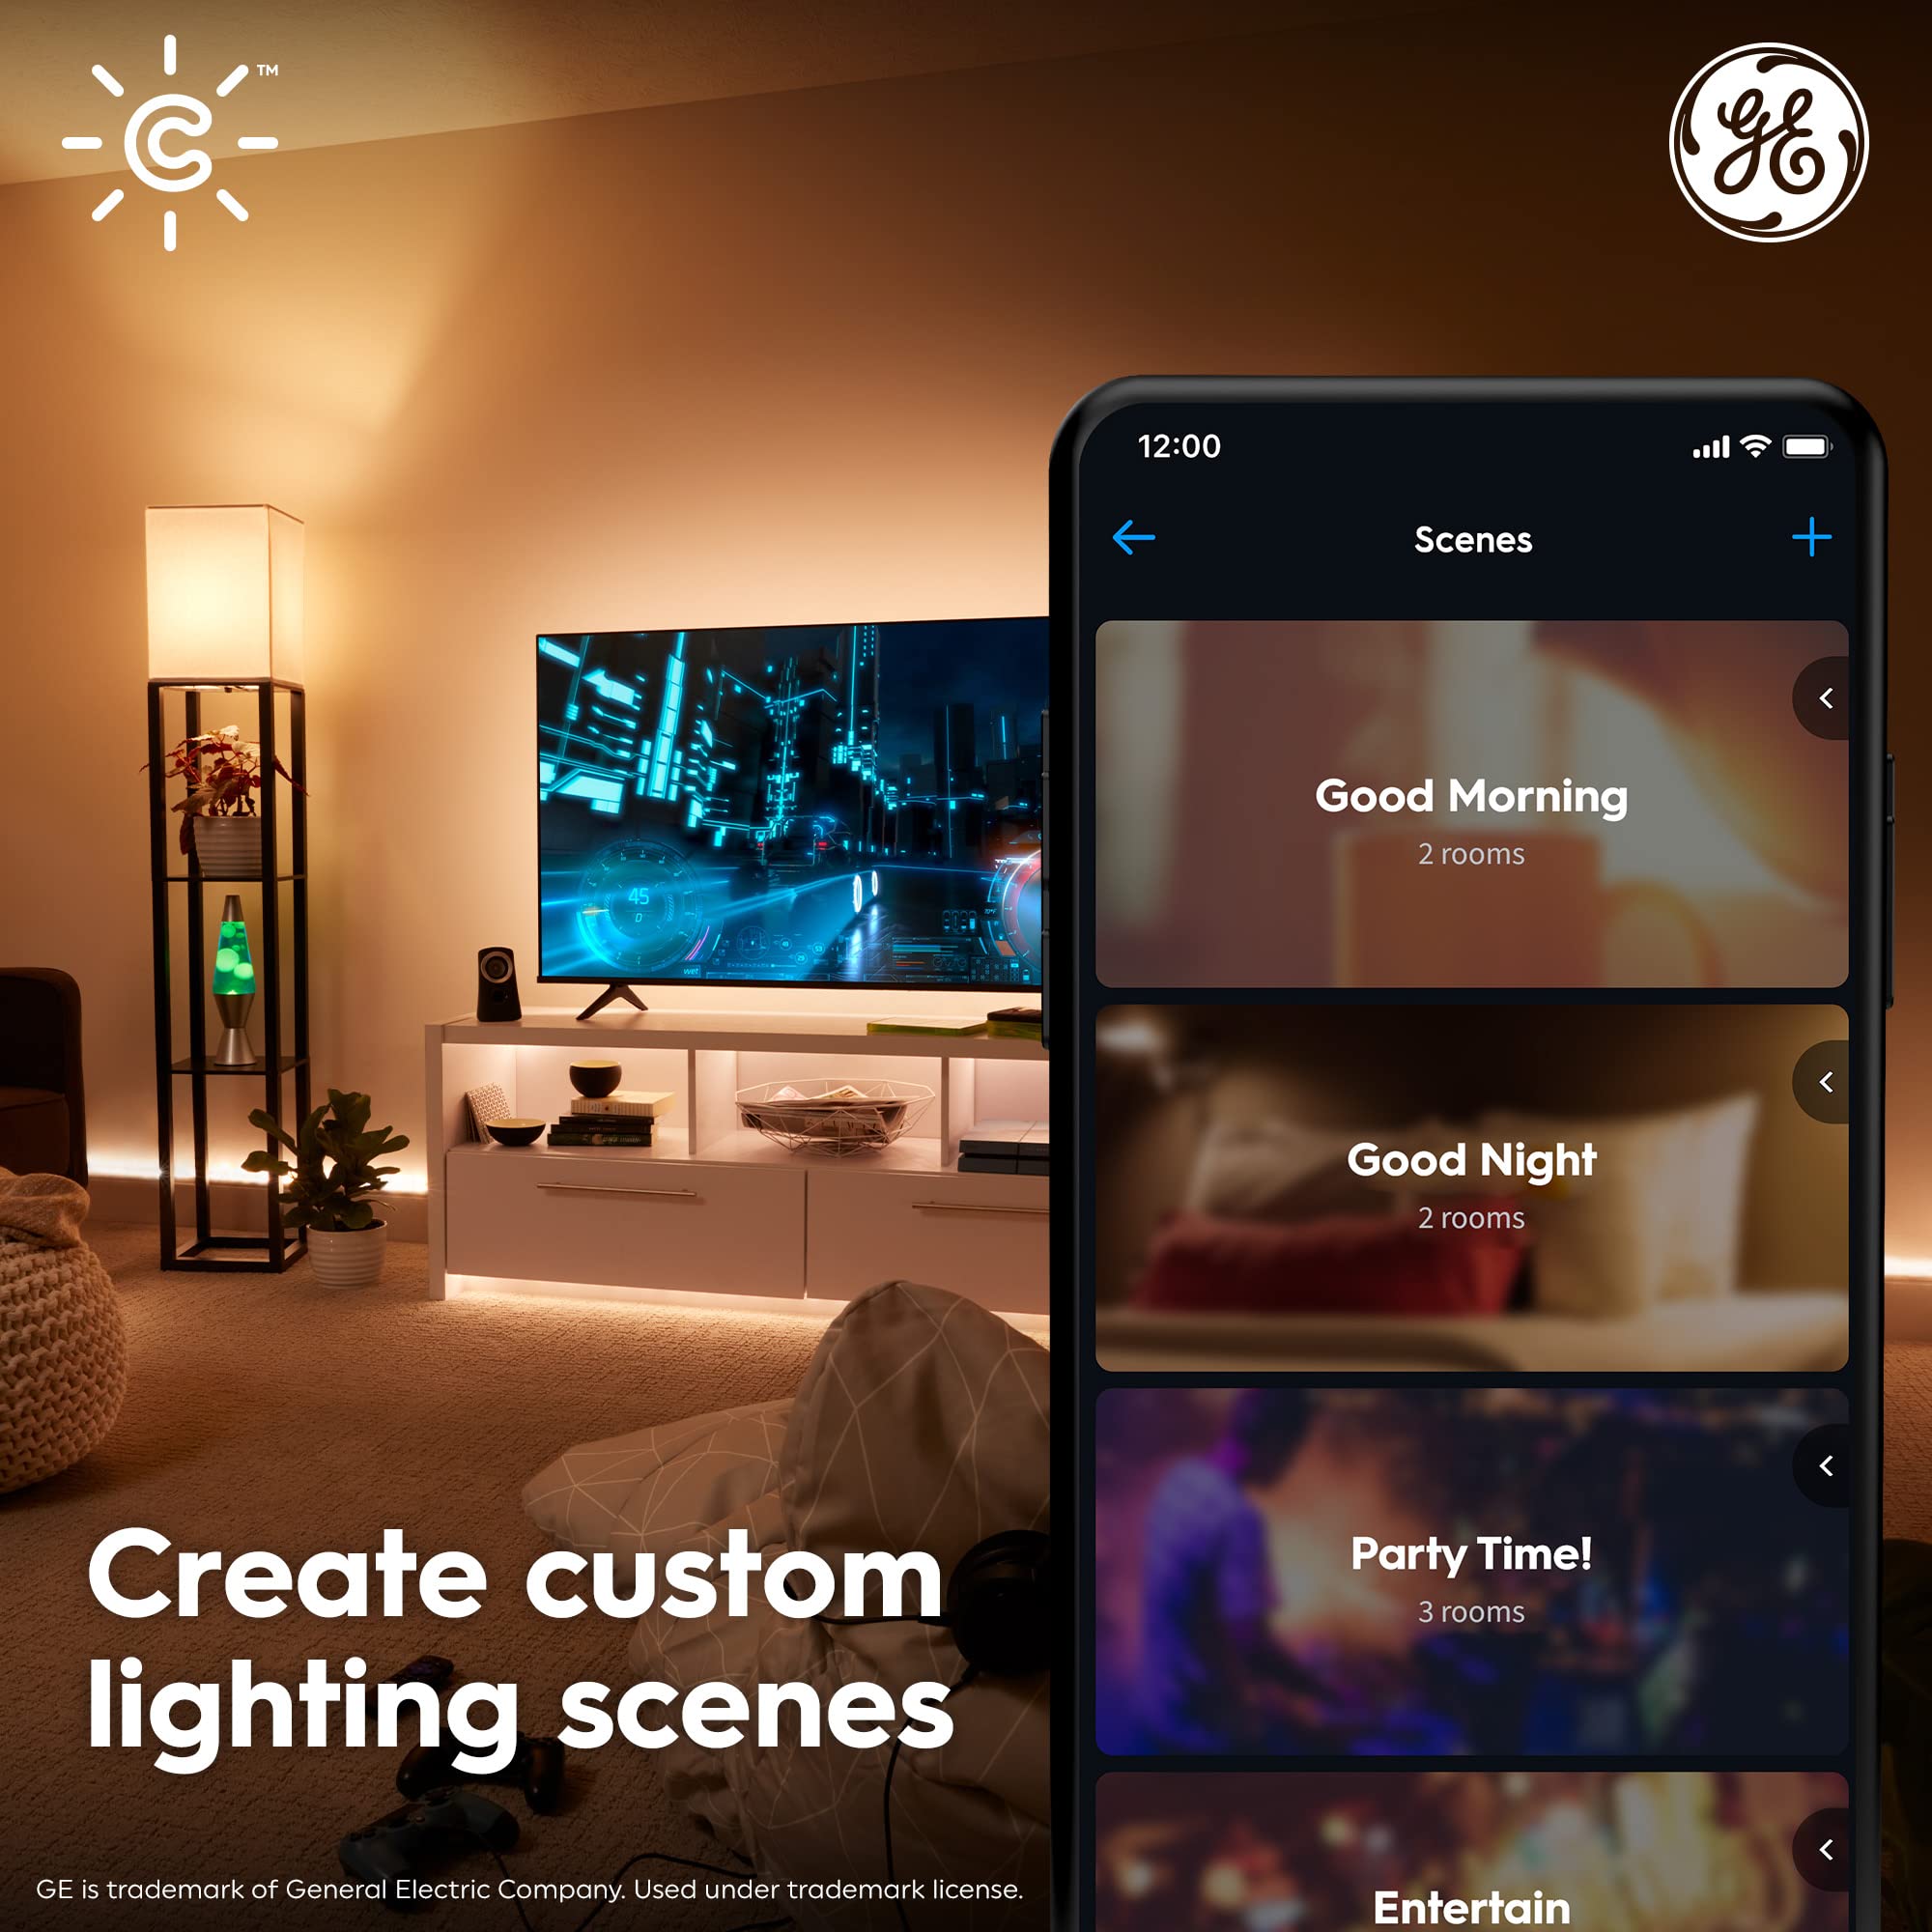 GE Lighting CYNC Smart LED Light Bulbs, Soft White, Bluetooth and Wi-Fi, Works with Alexa and Google Home, A19 Bulbs (2 Pack)